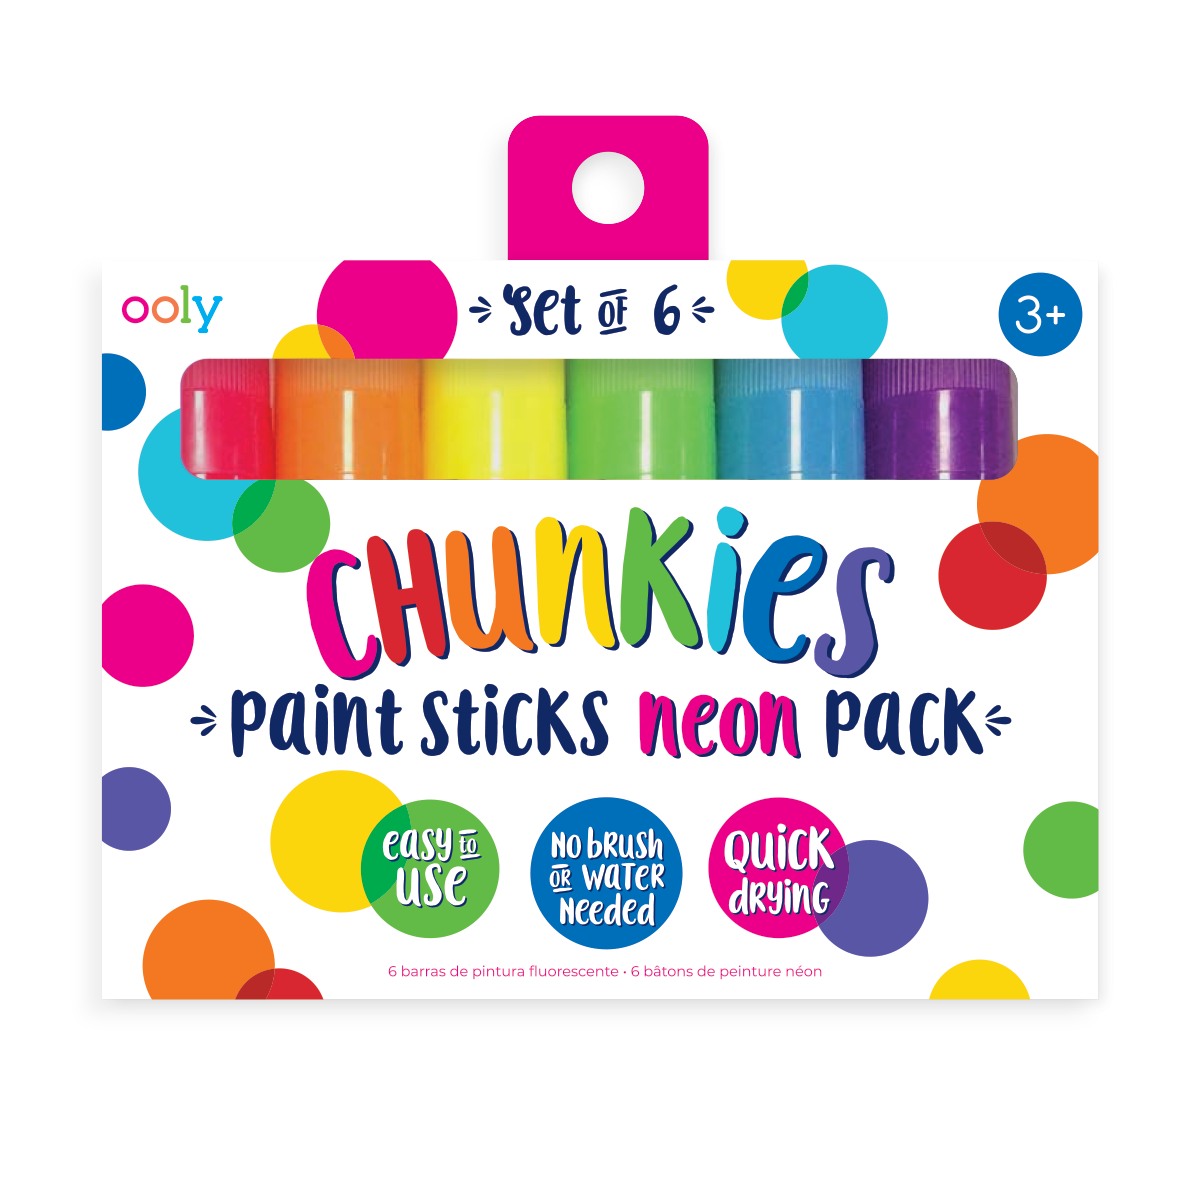 Chunkies Paint Sticks – OK the store